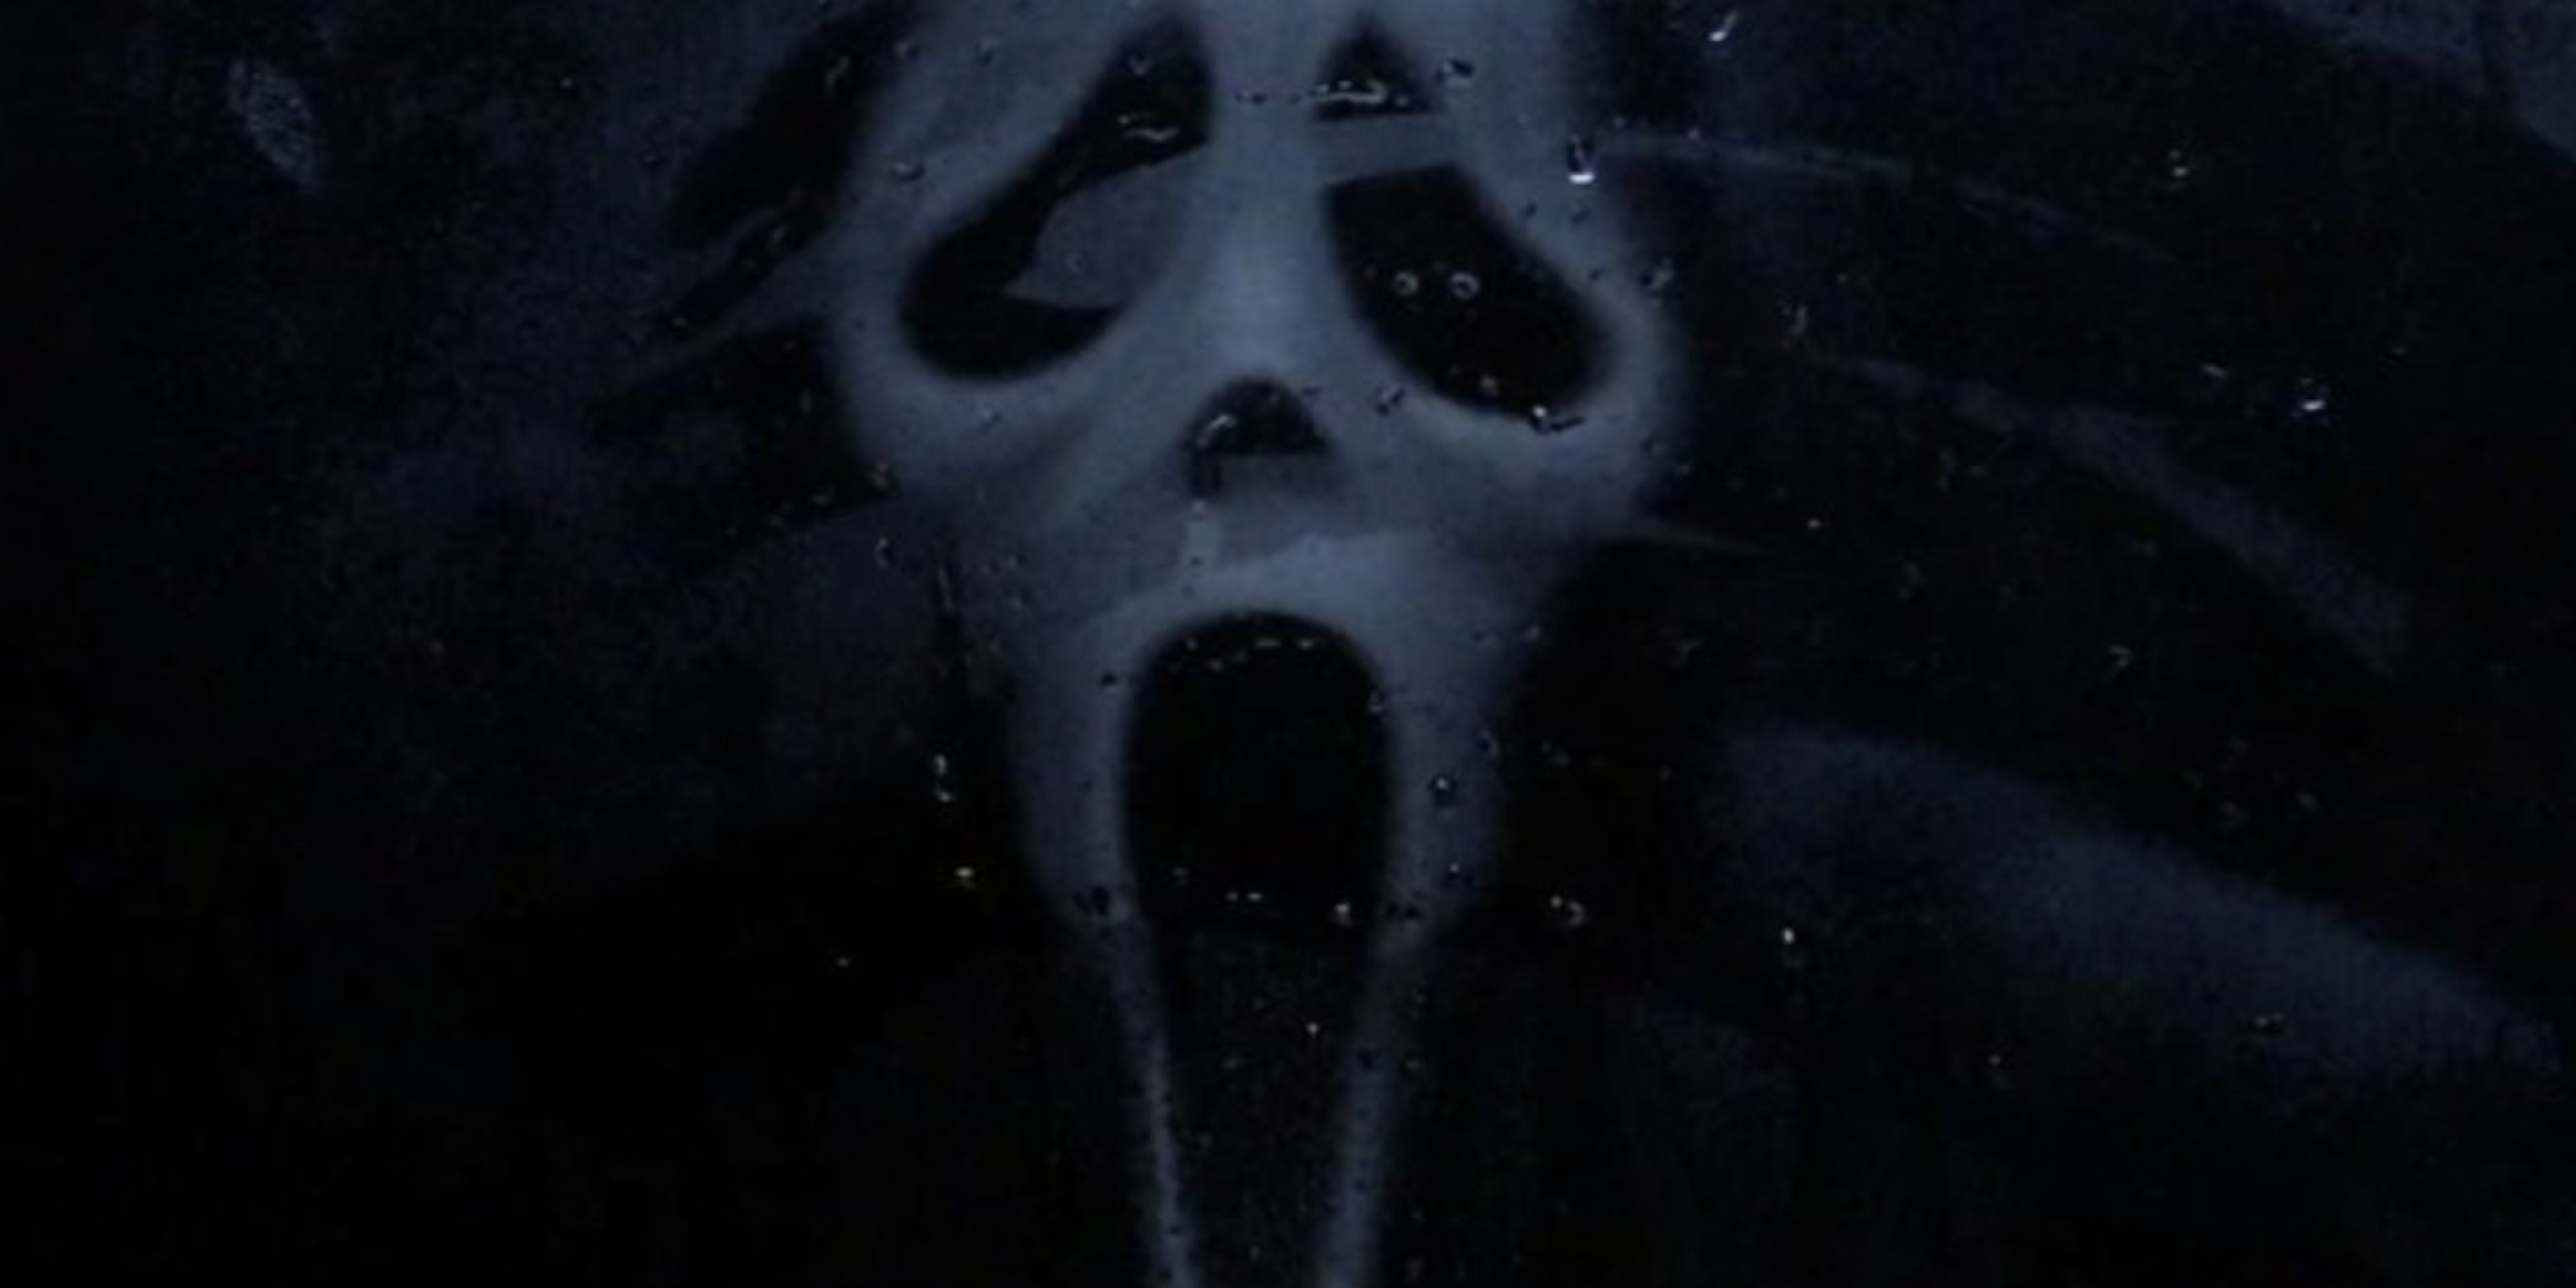 Scream Season 3